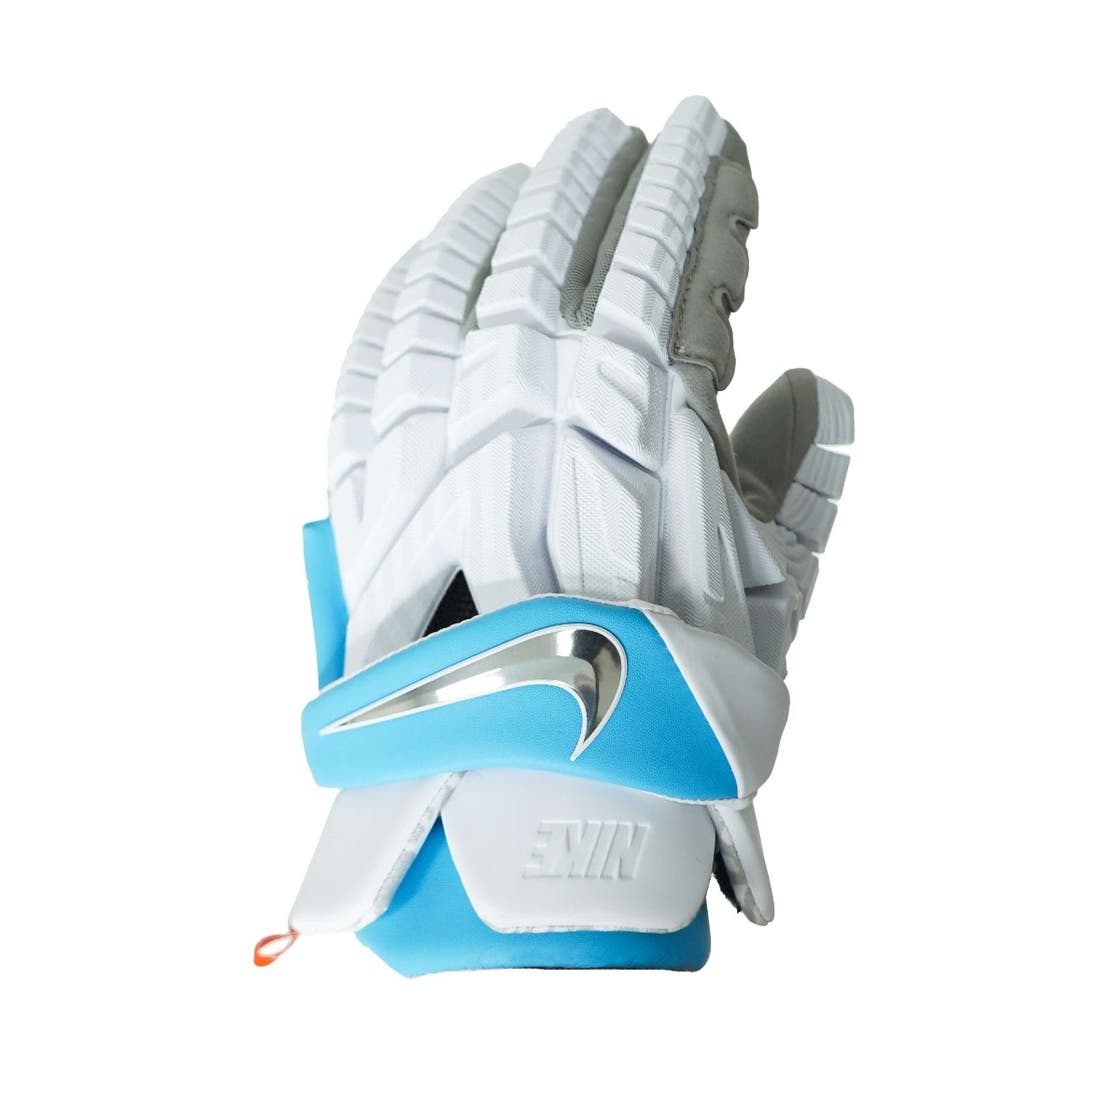 Nike Vapor Premier Limited Edition Lacrosse Glove | Lacrosse Unlimited